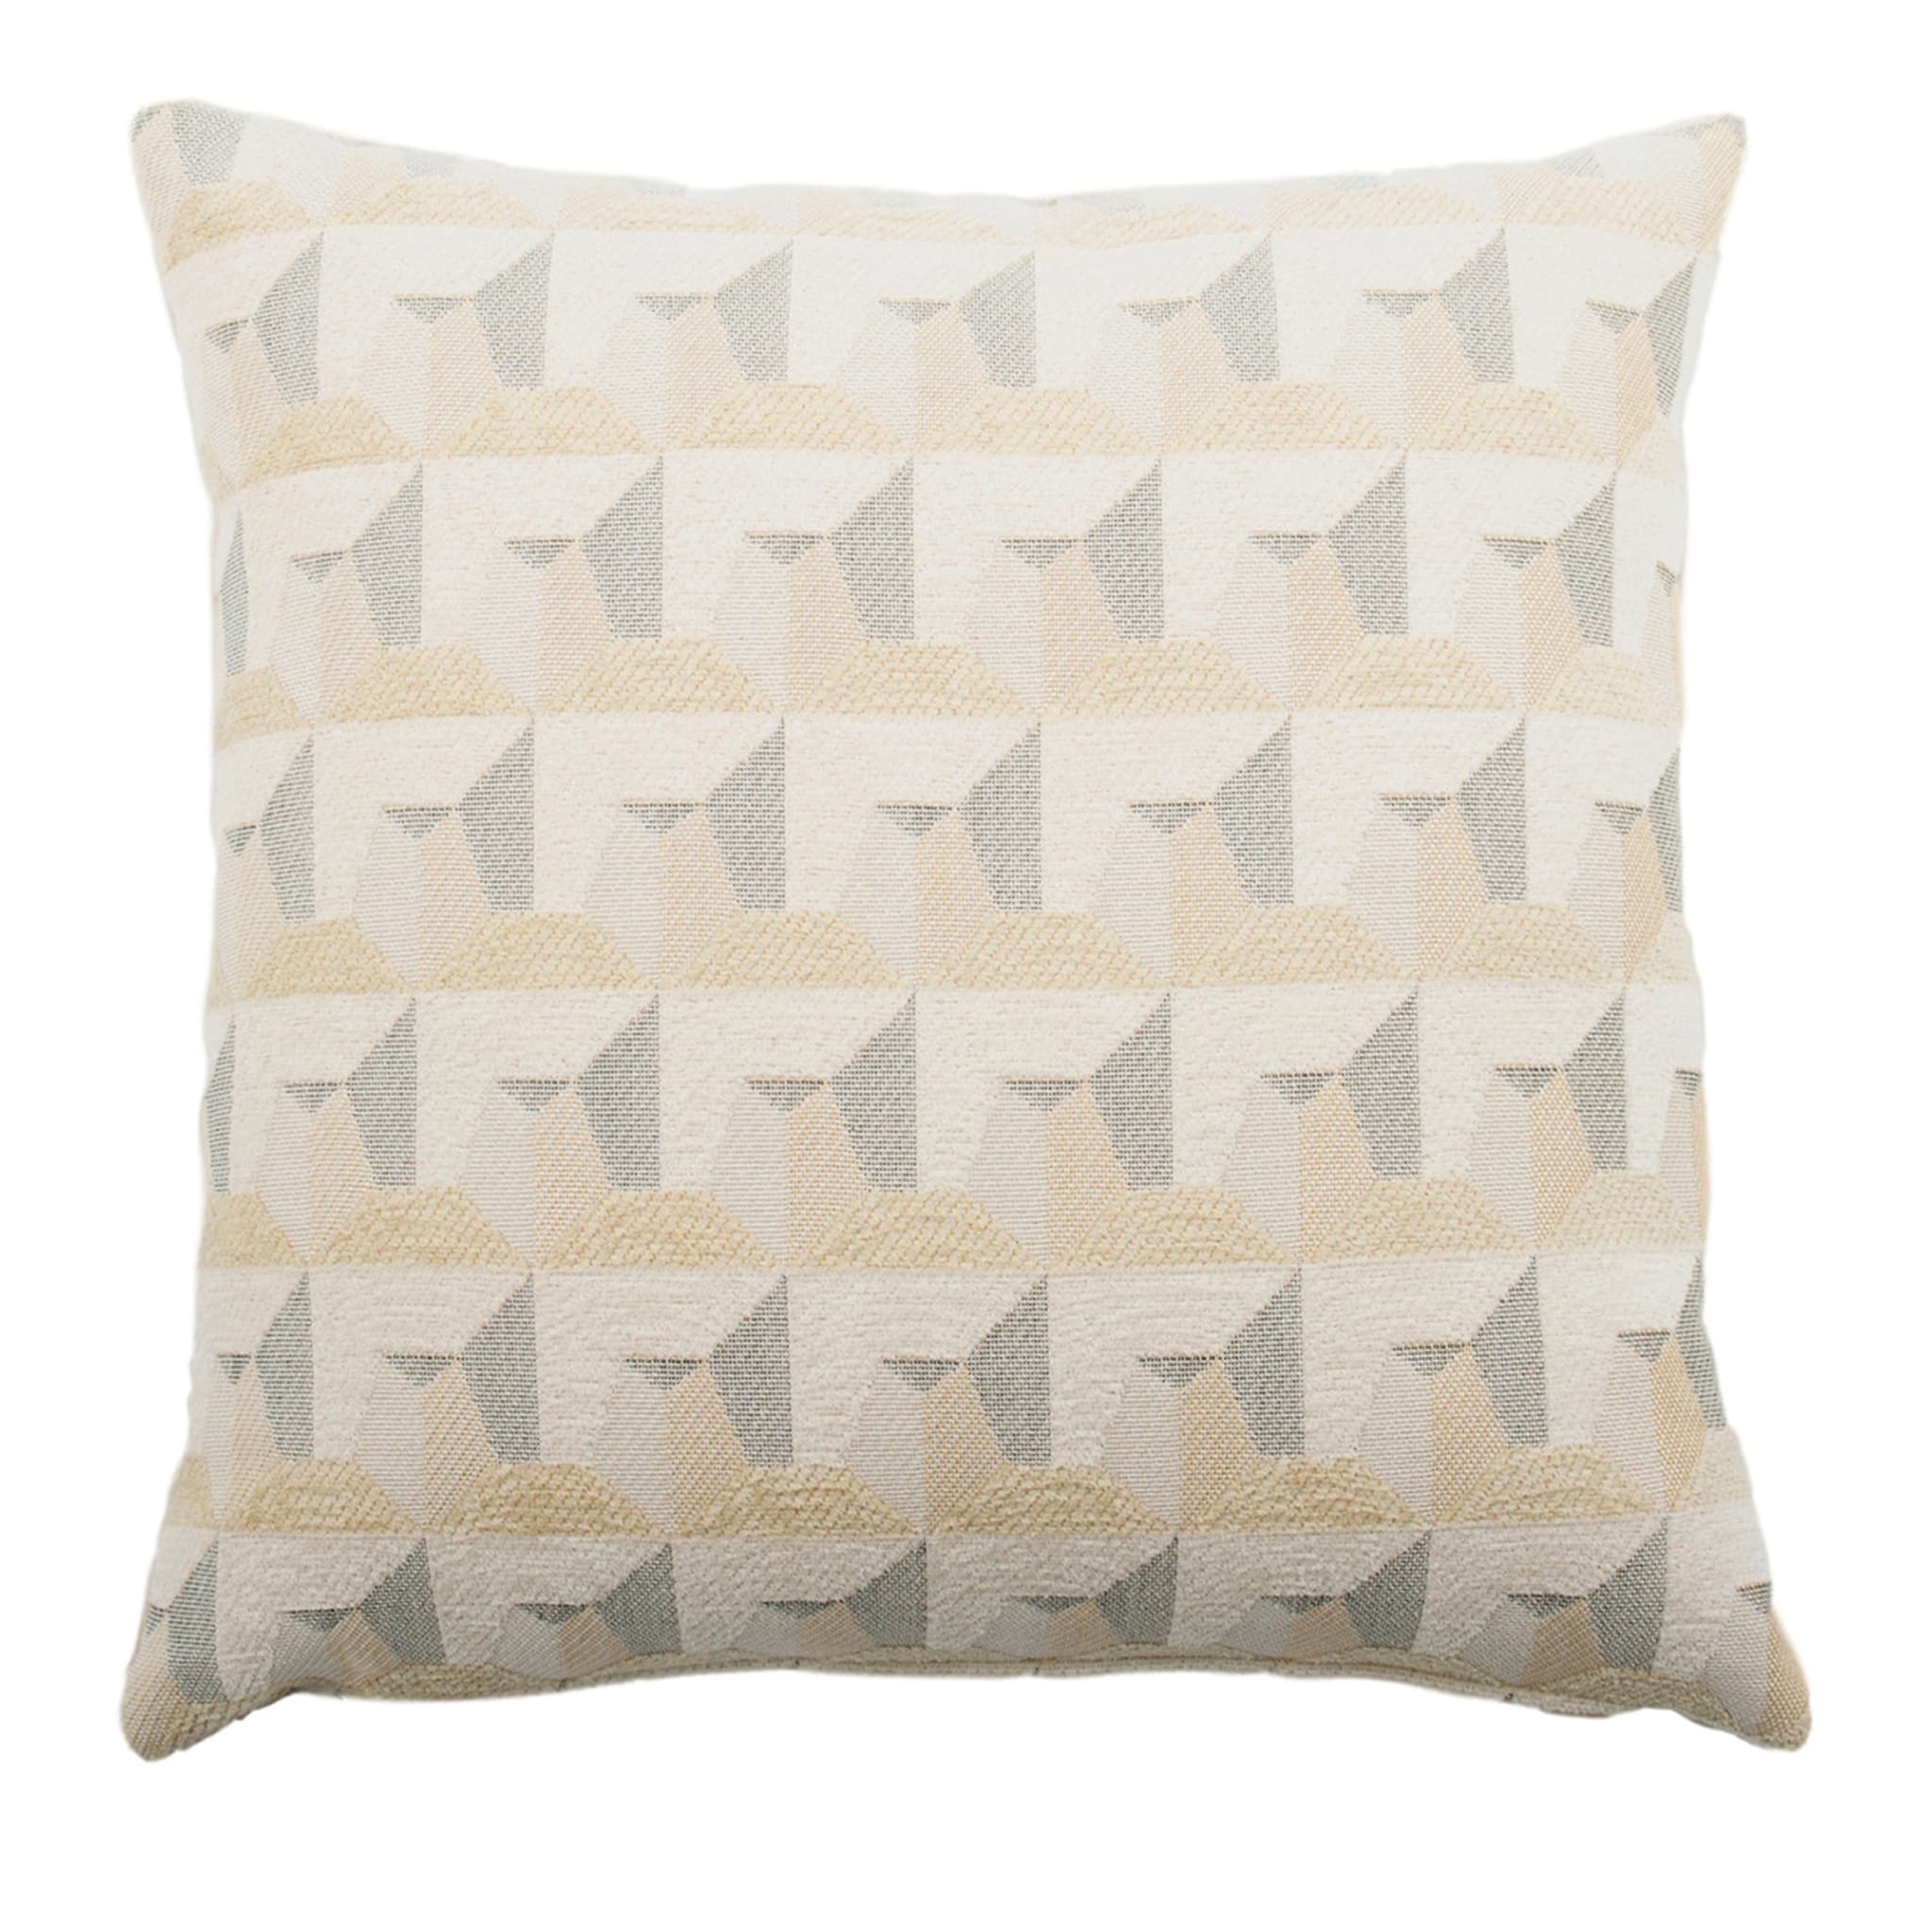 White Carrè Cushion in geometric jacquard fabric - Main view